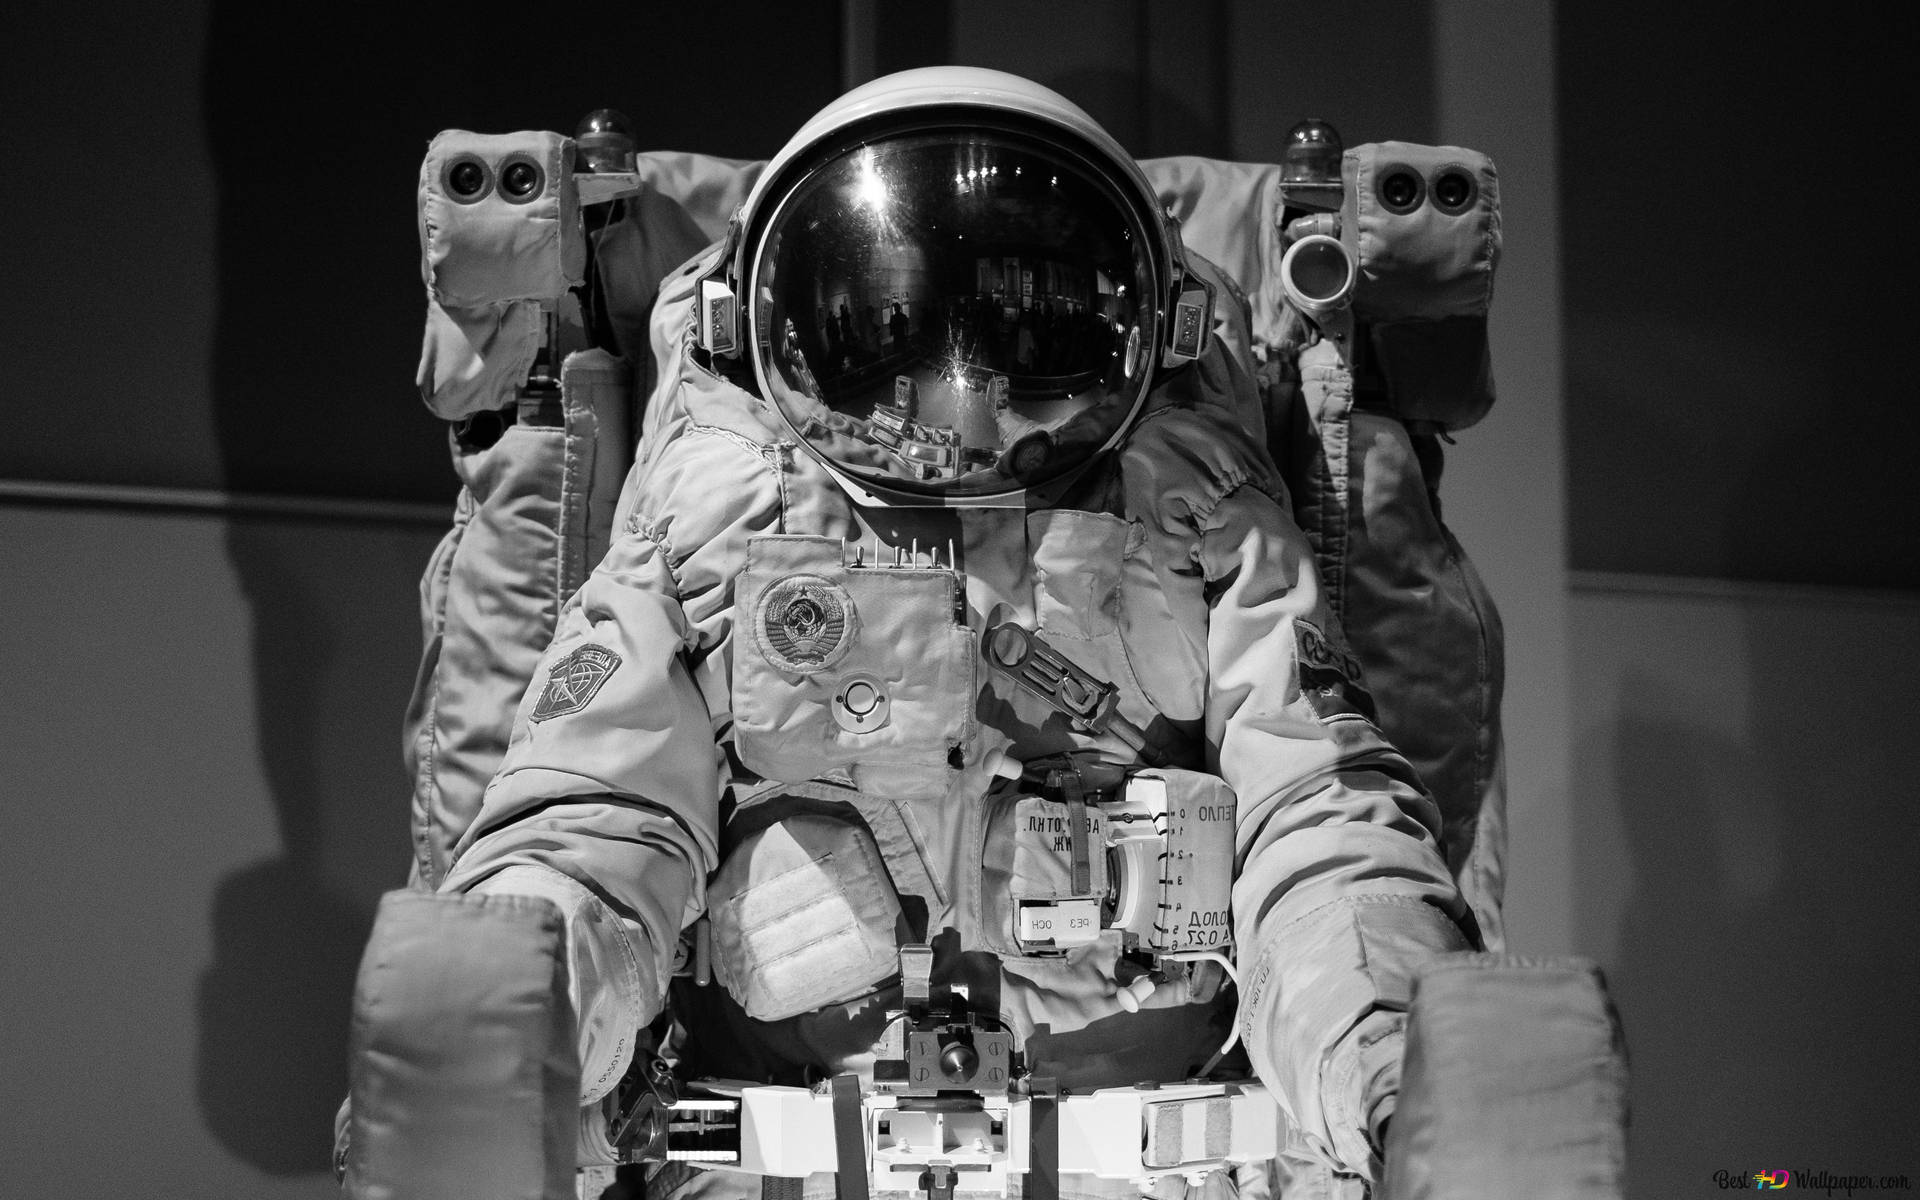 En sort og hvid astronaut ser på horisonten udover det uendelige rum. Wallpaper